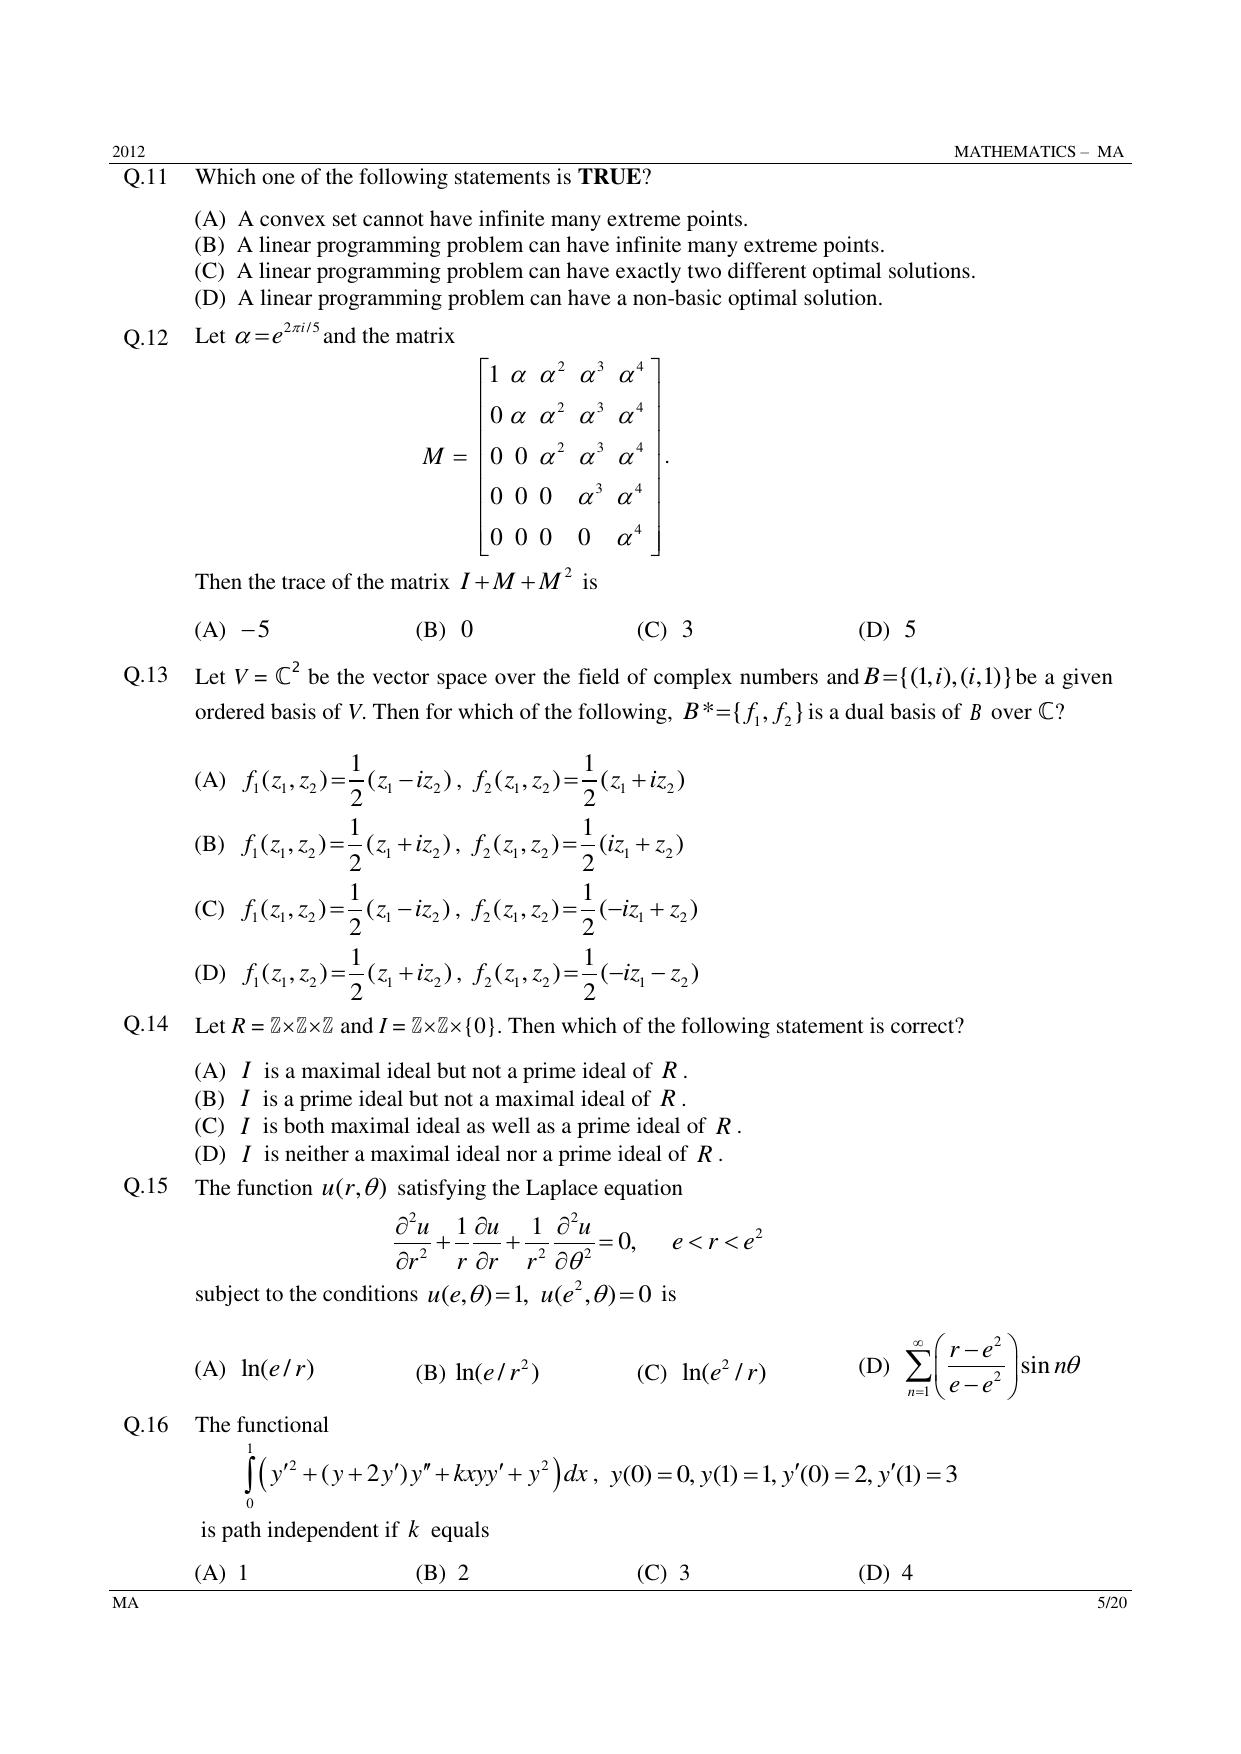 GATE 2012 Mathematics (MA) Question Paper with Answer Key - Page 5